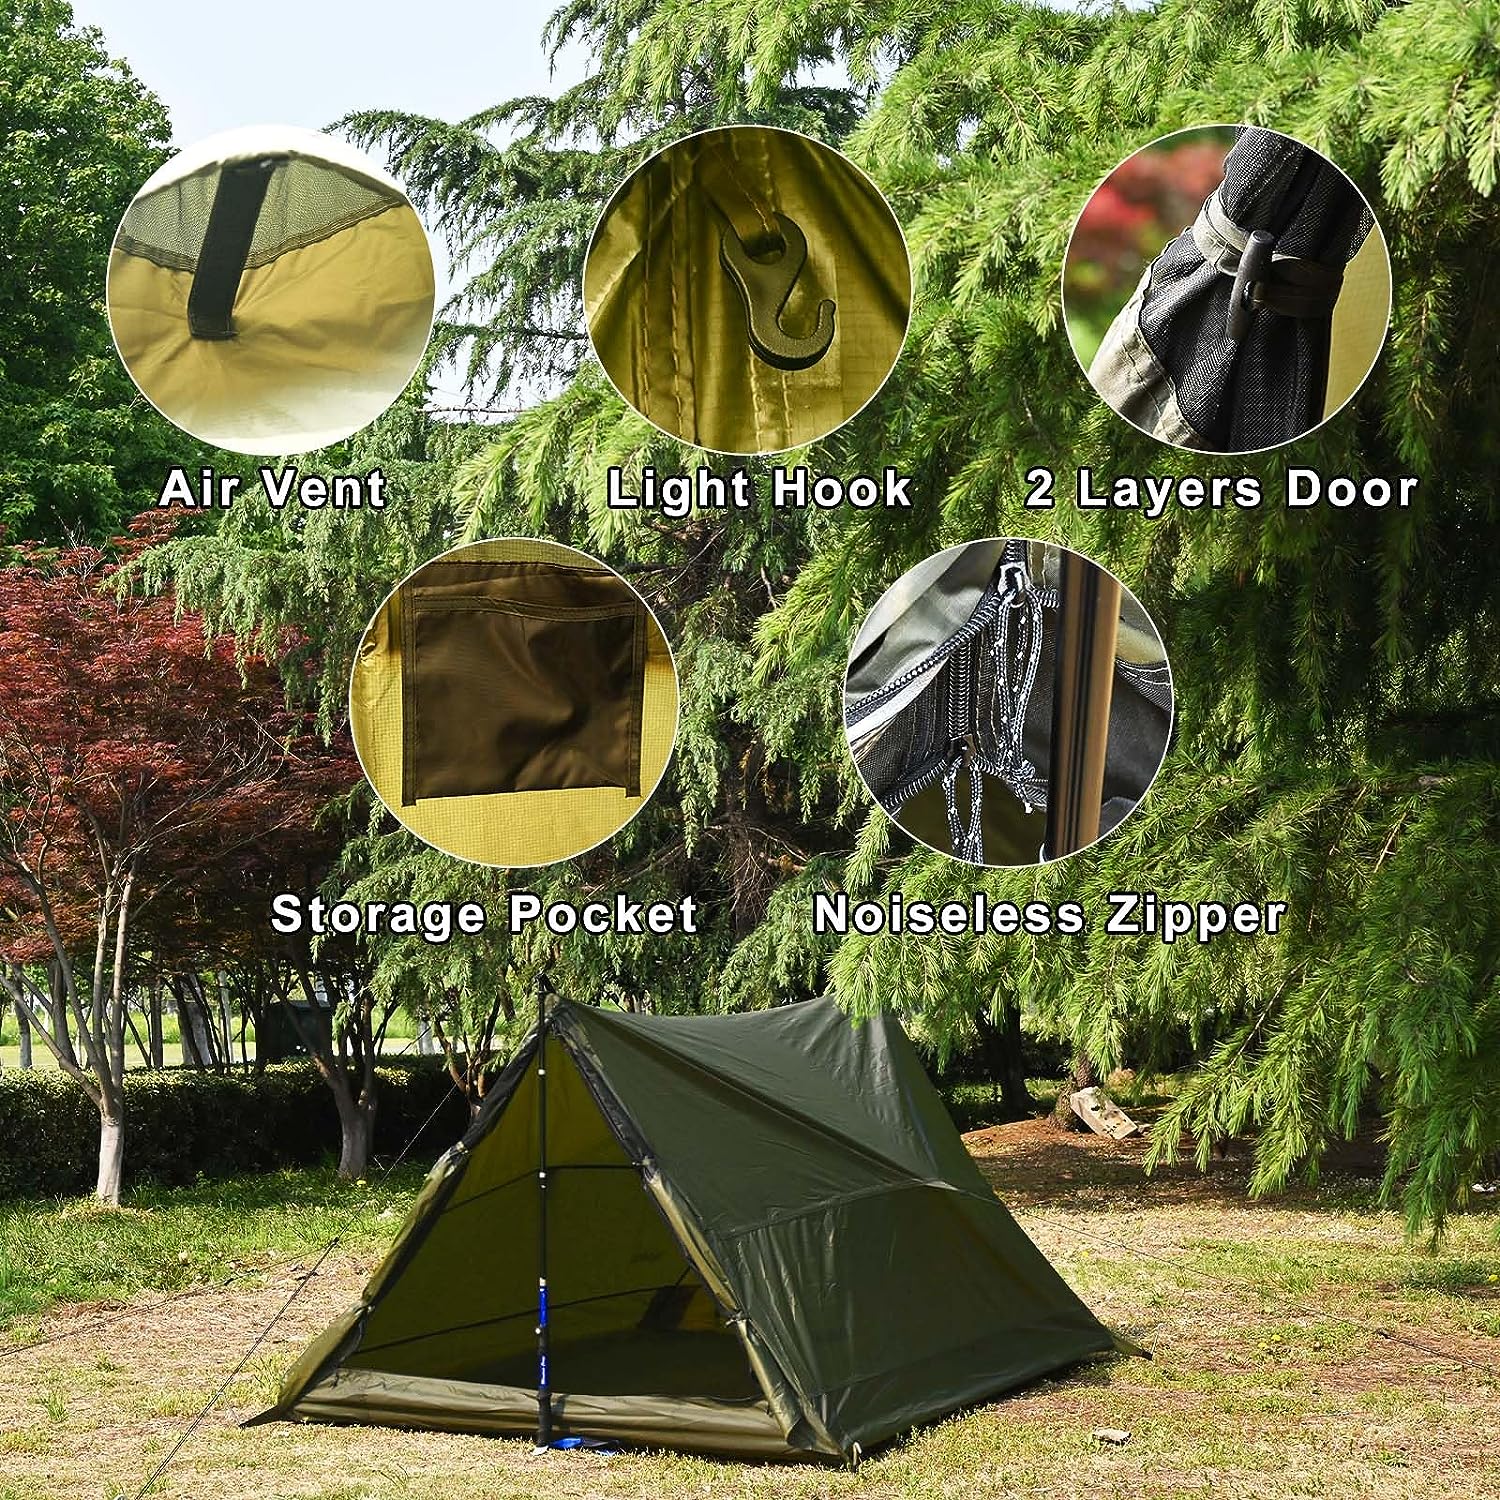 waldzimmer ridge tent green polyester backpacking tent details